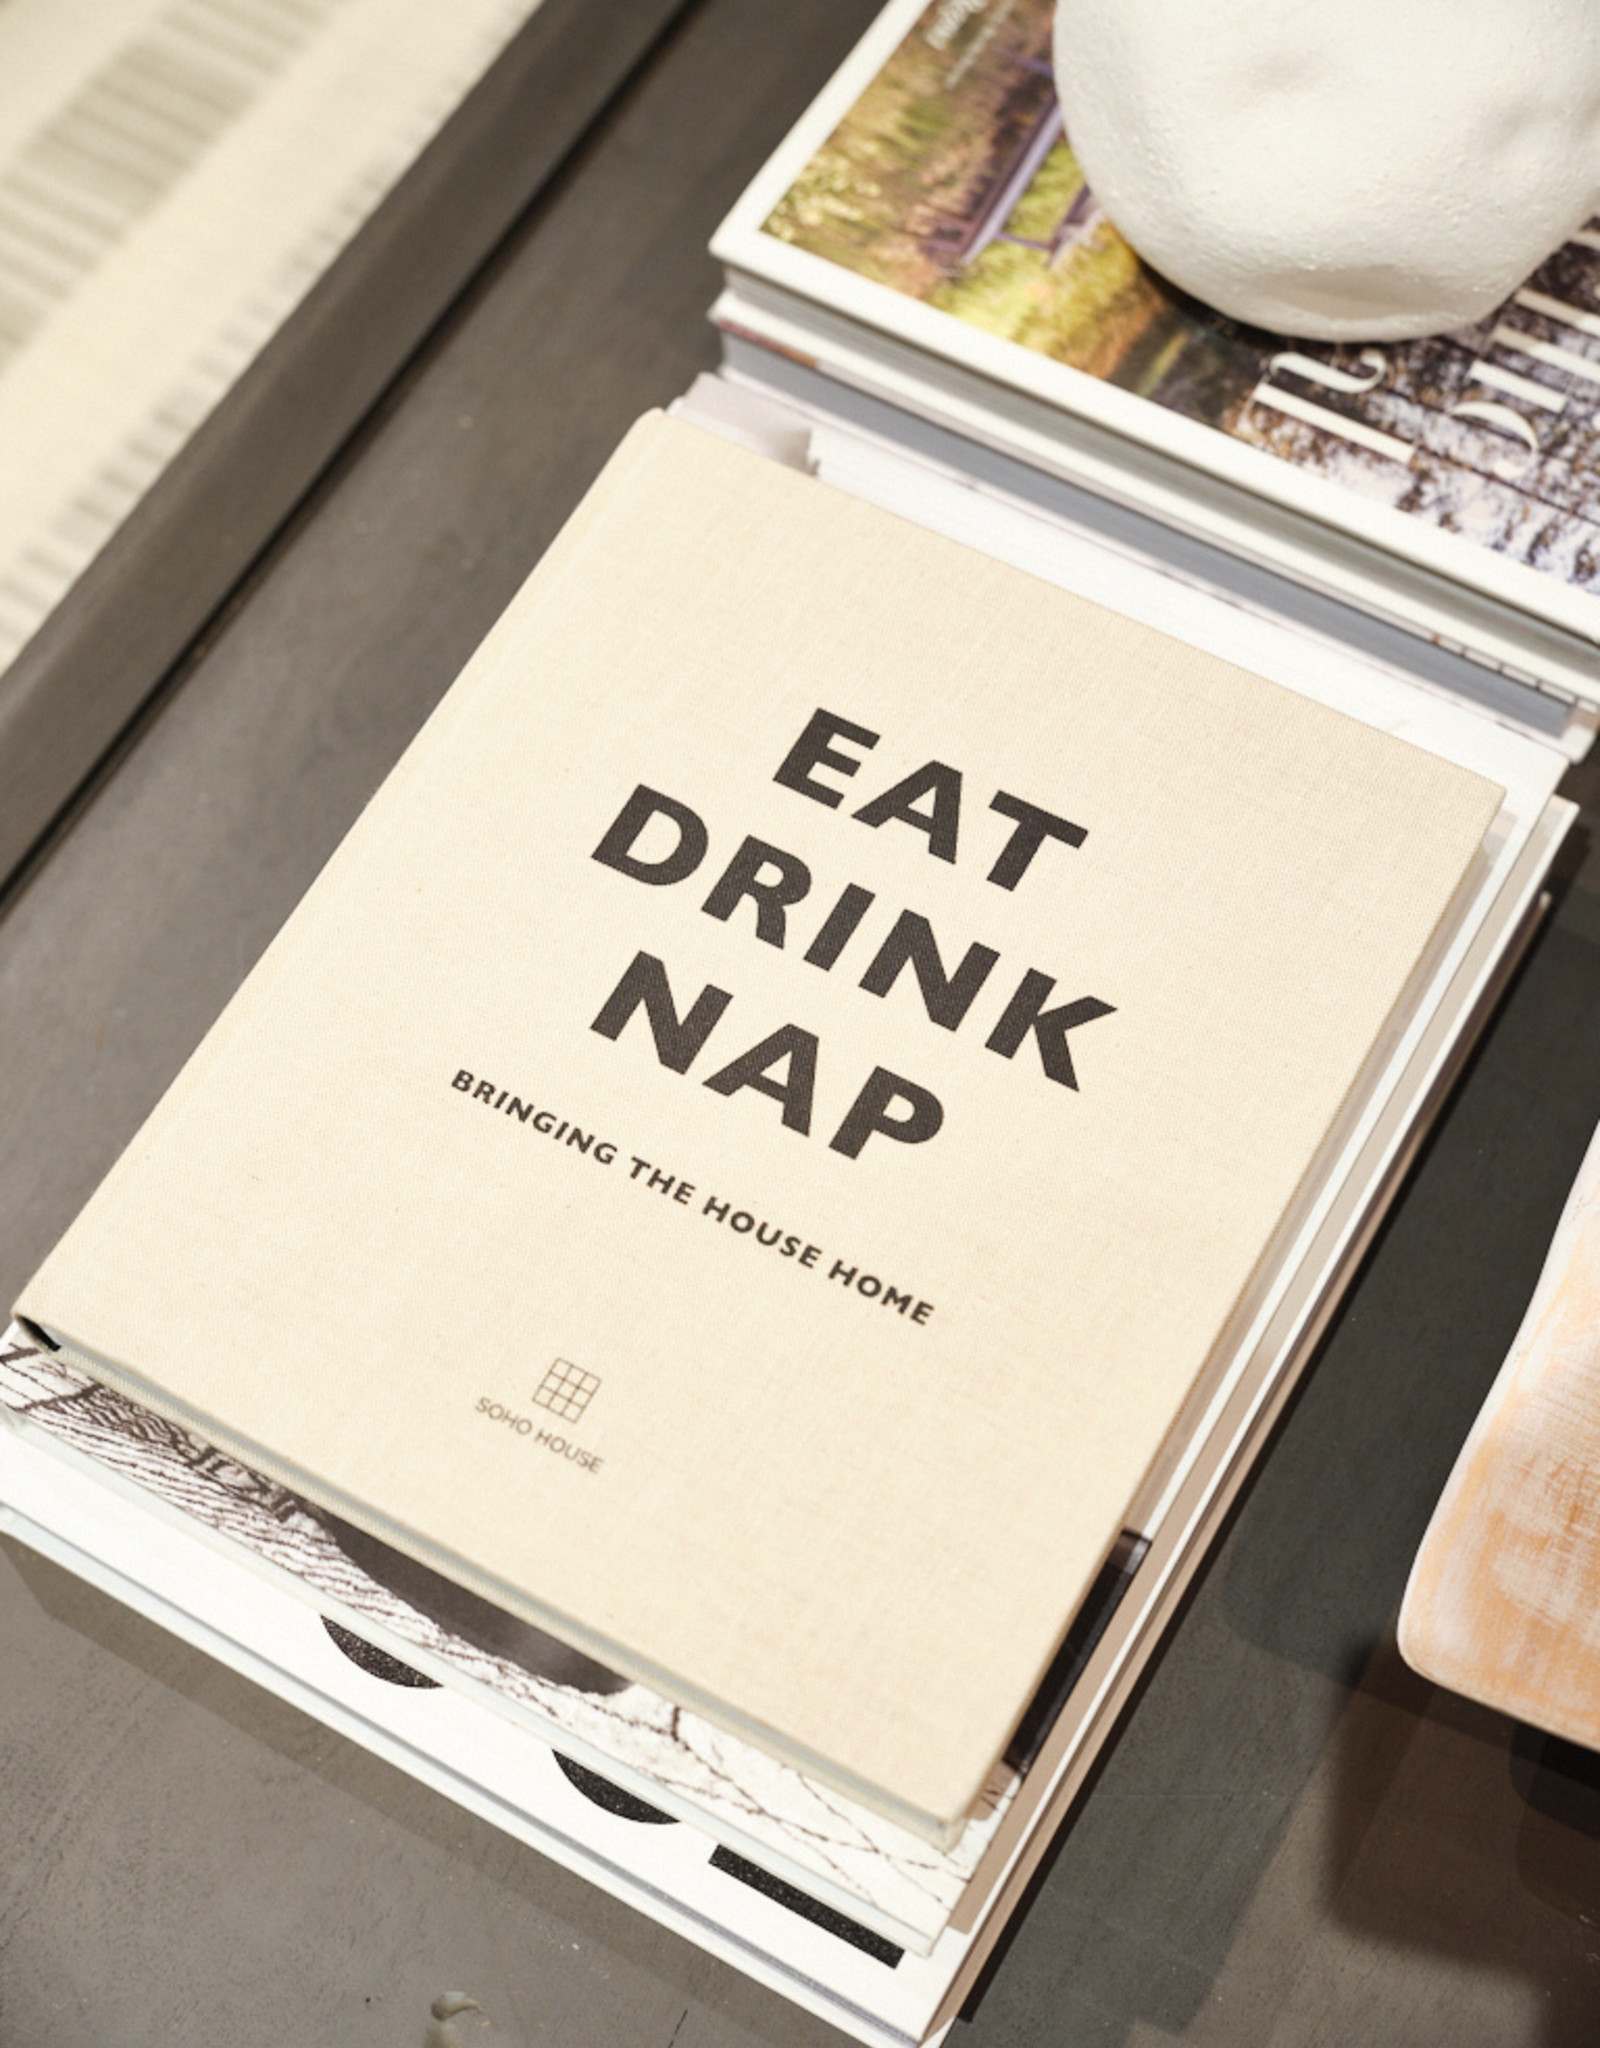 Eat, Drink, Nap Book